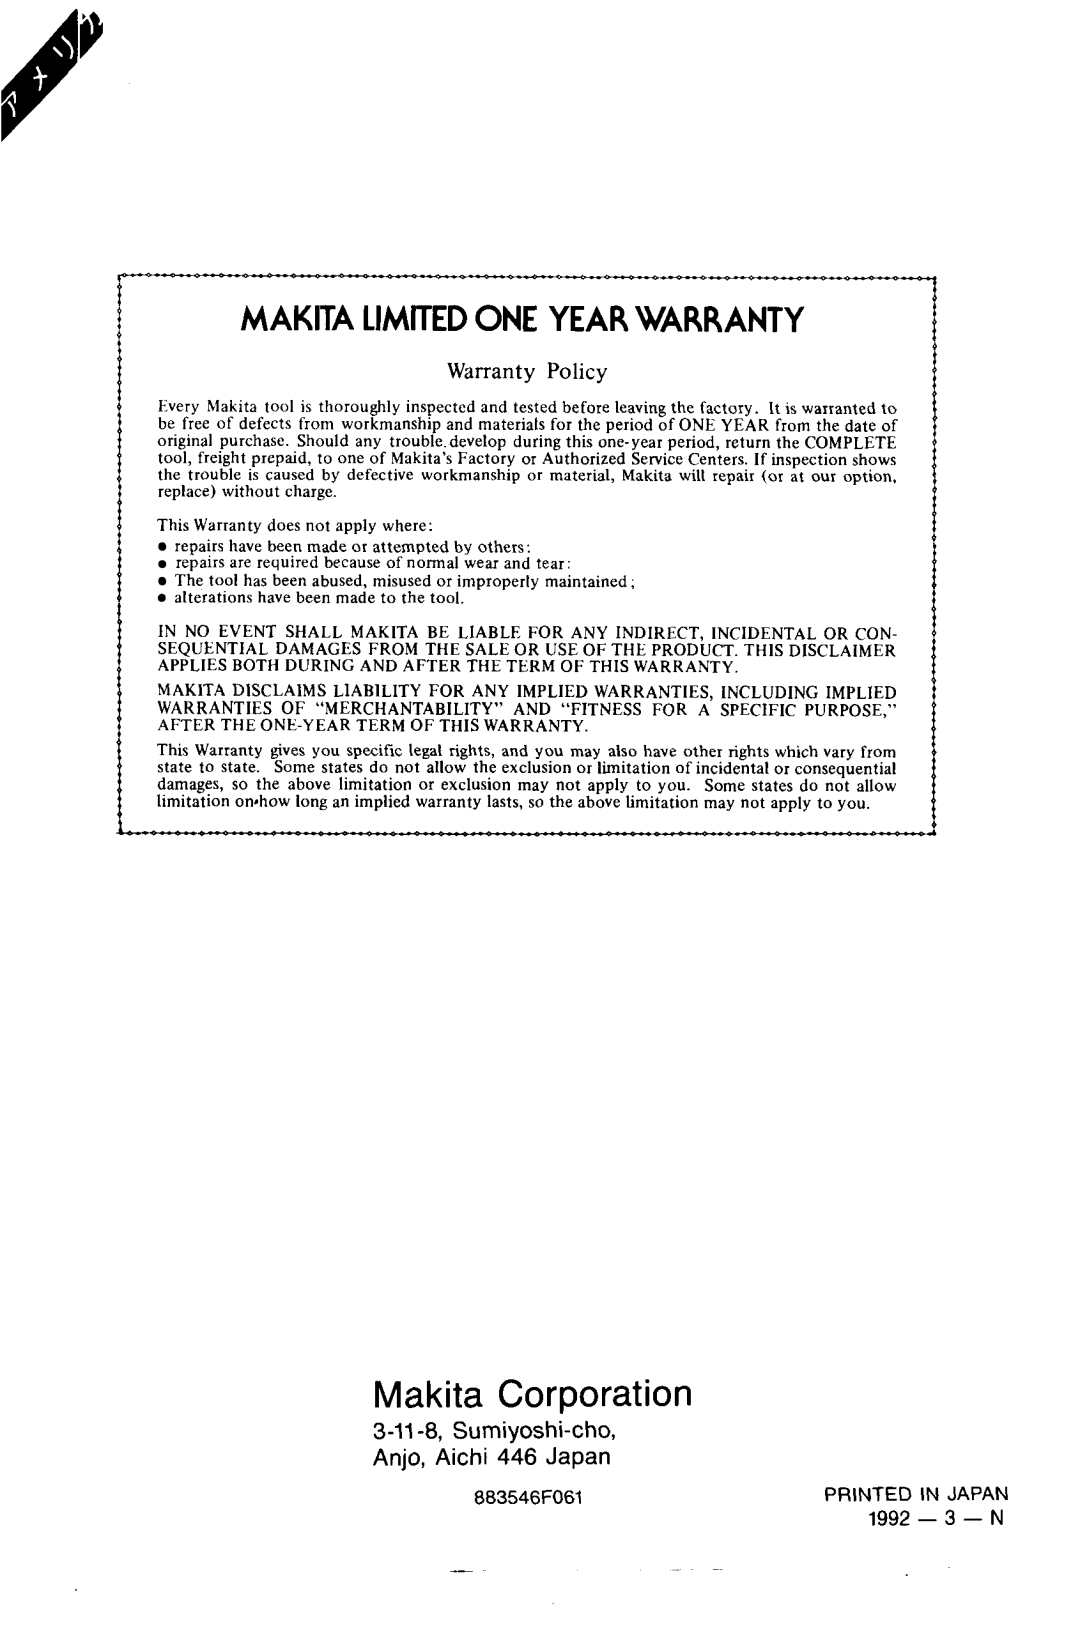 Makita 607LDWK, 6071D Makita Corporation, Makita Limited One Year Warranty, Warranty Policy, 3 - N, Printed In Japan 